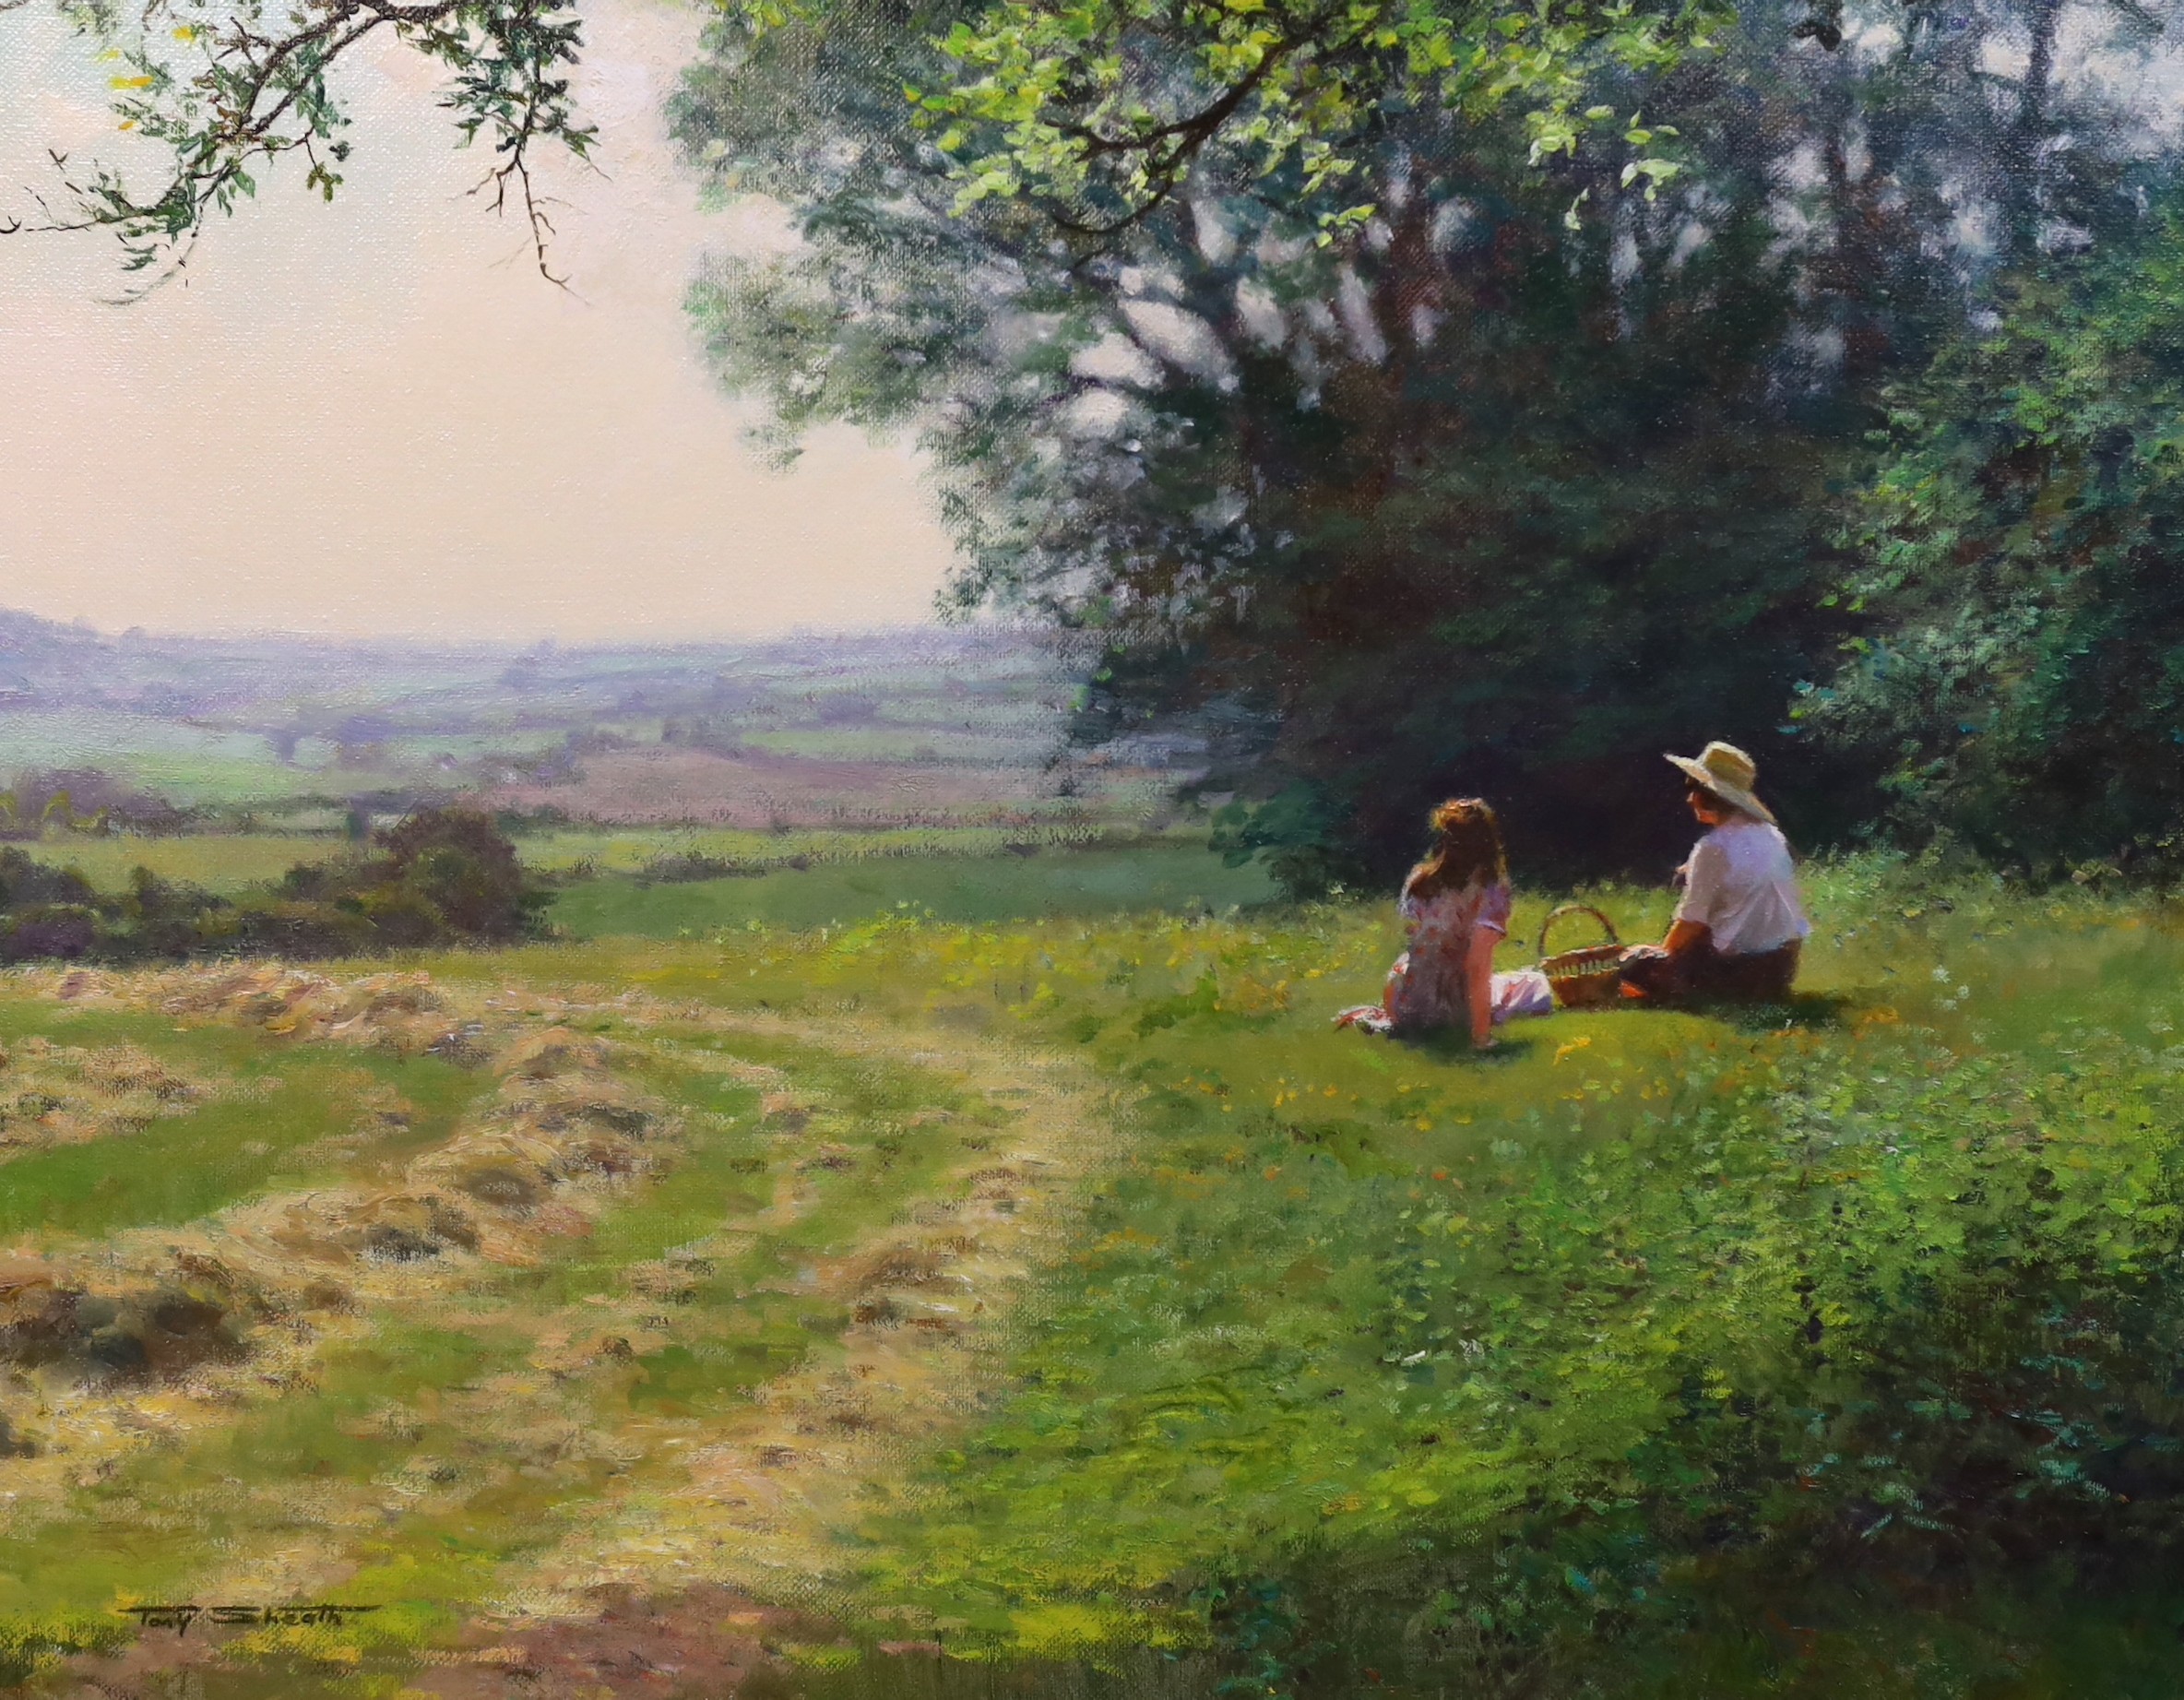 Antony Sheath (British, b.1946), 'Picnic on the hill', oil on canvas, 39 x 49cm